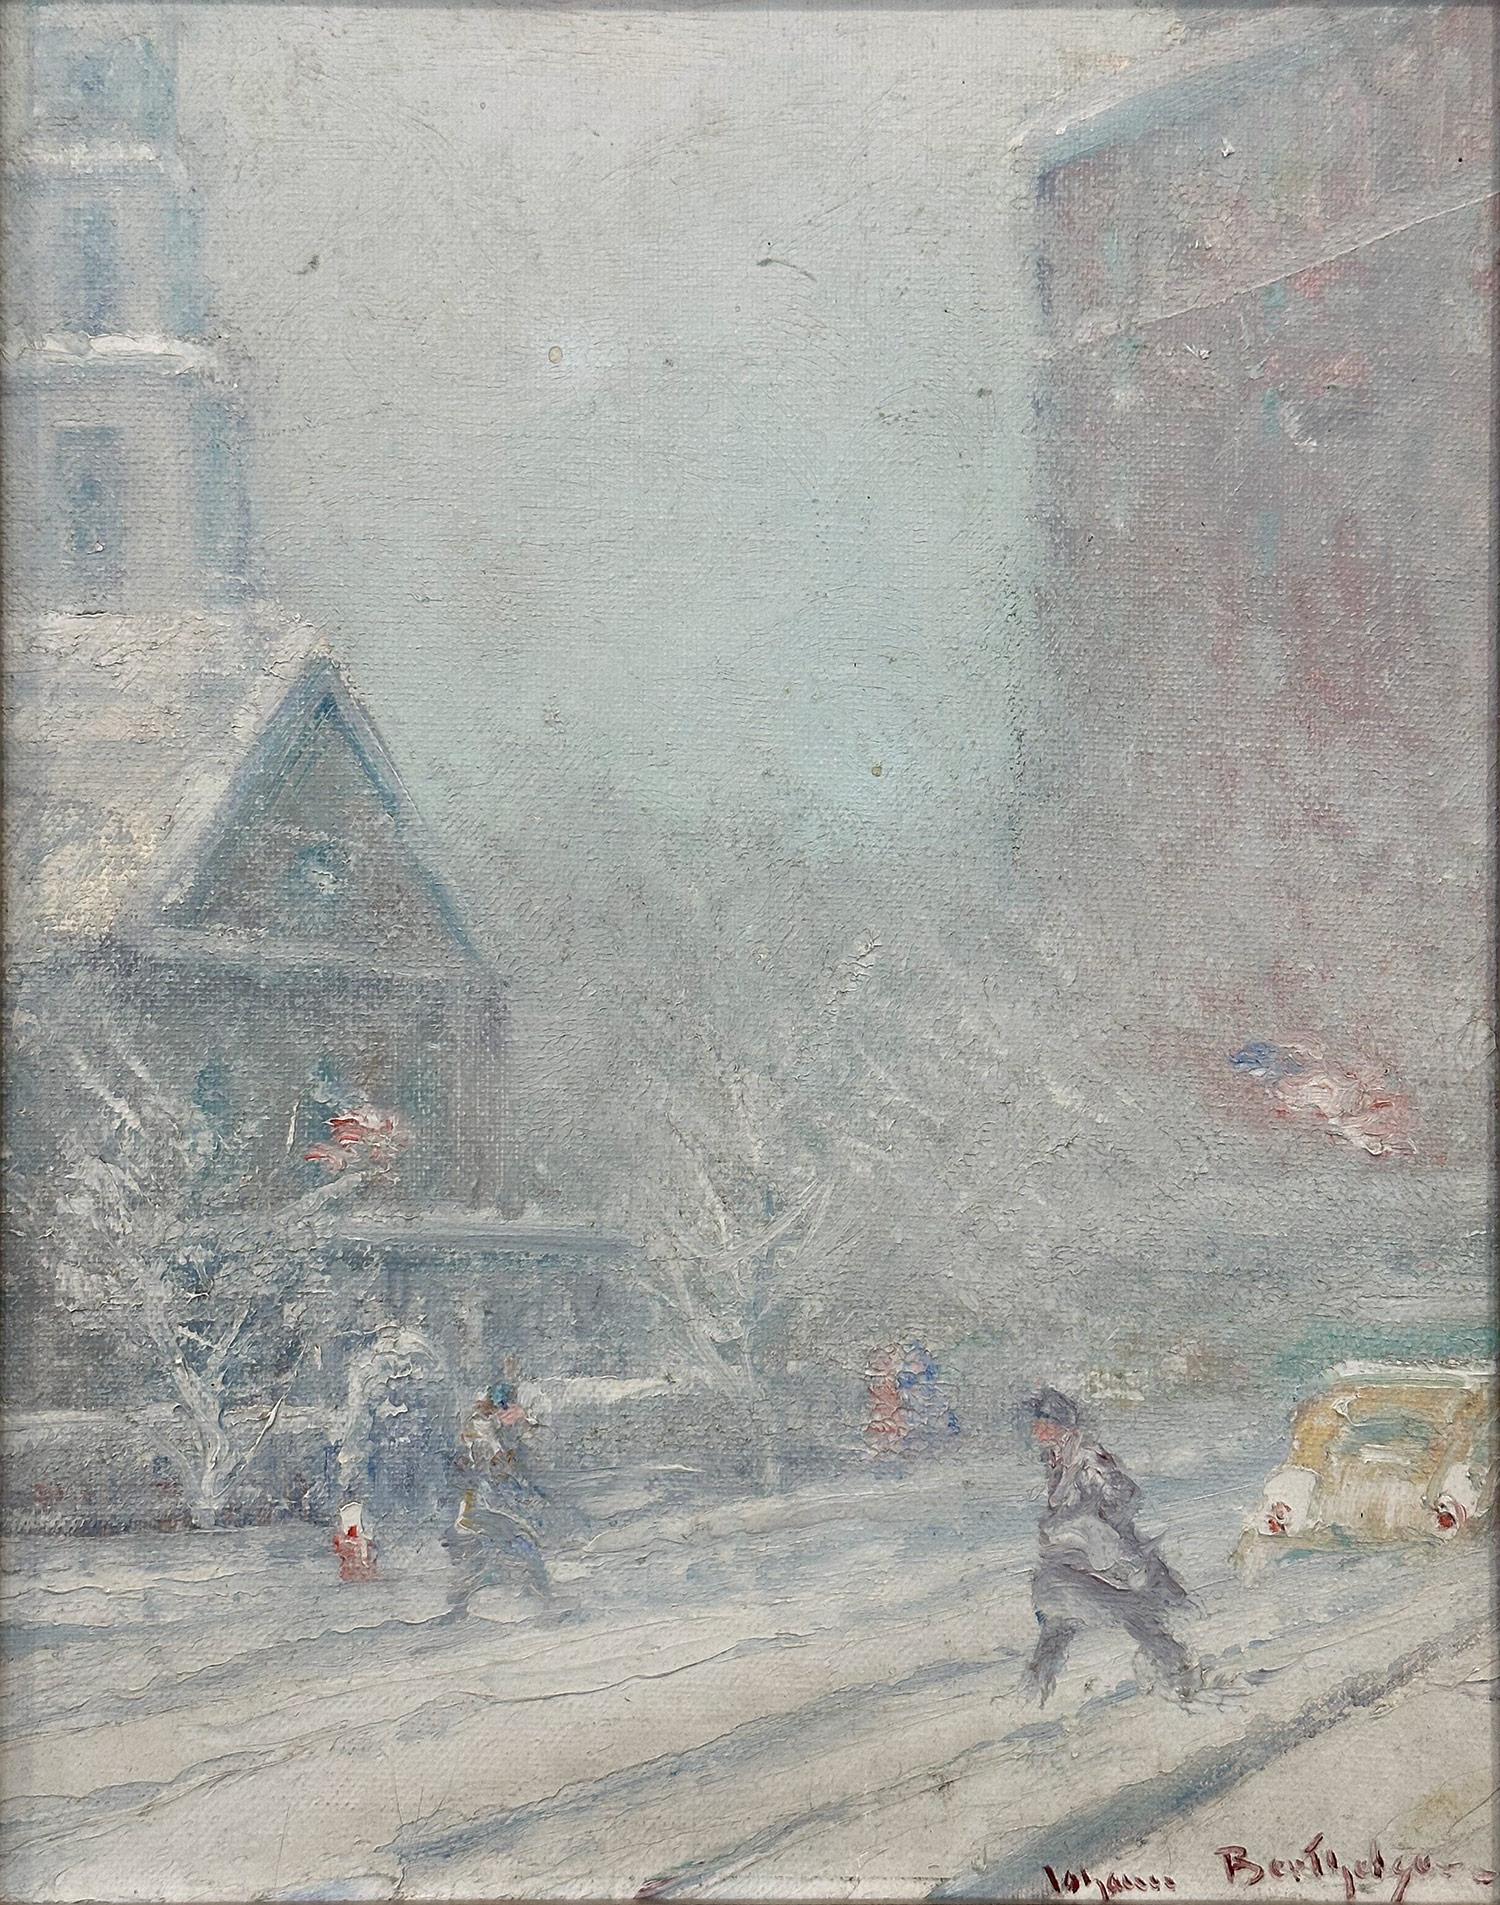 Impressionistische Winter Street-Szene „Saint Paul's Chapel“ in Lower Manhattan, NYC – Painting von Johann Berthelsen